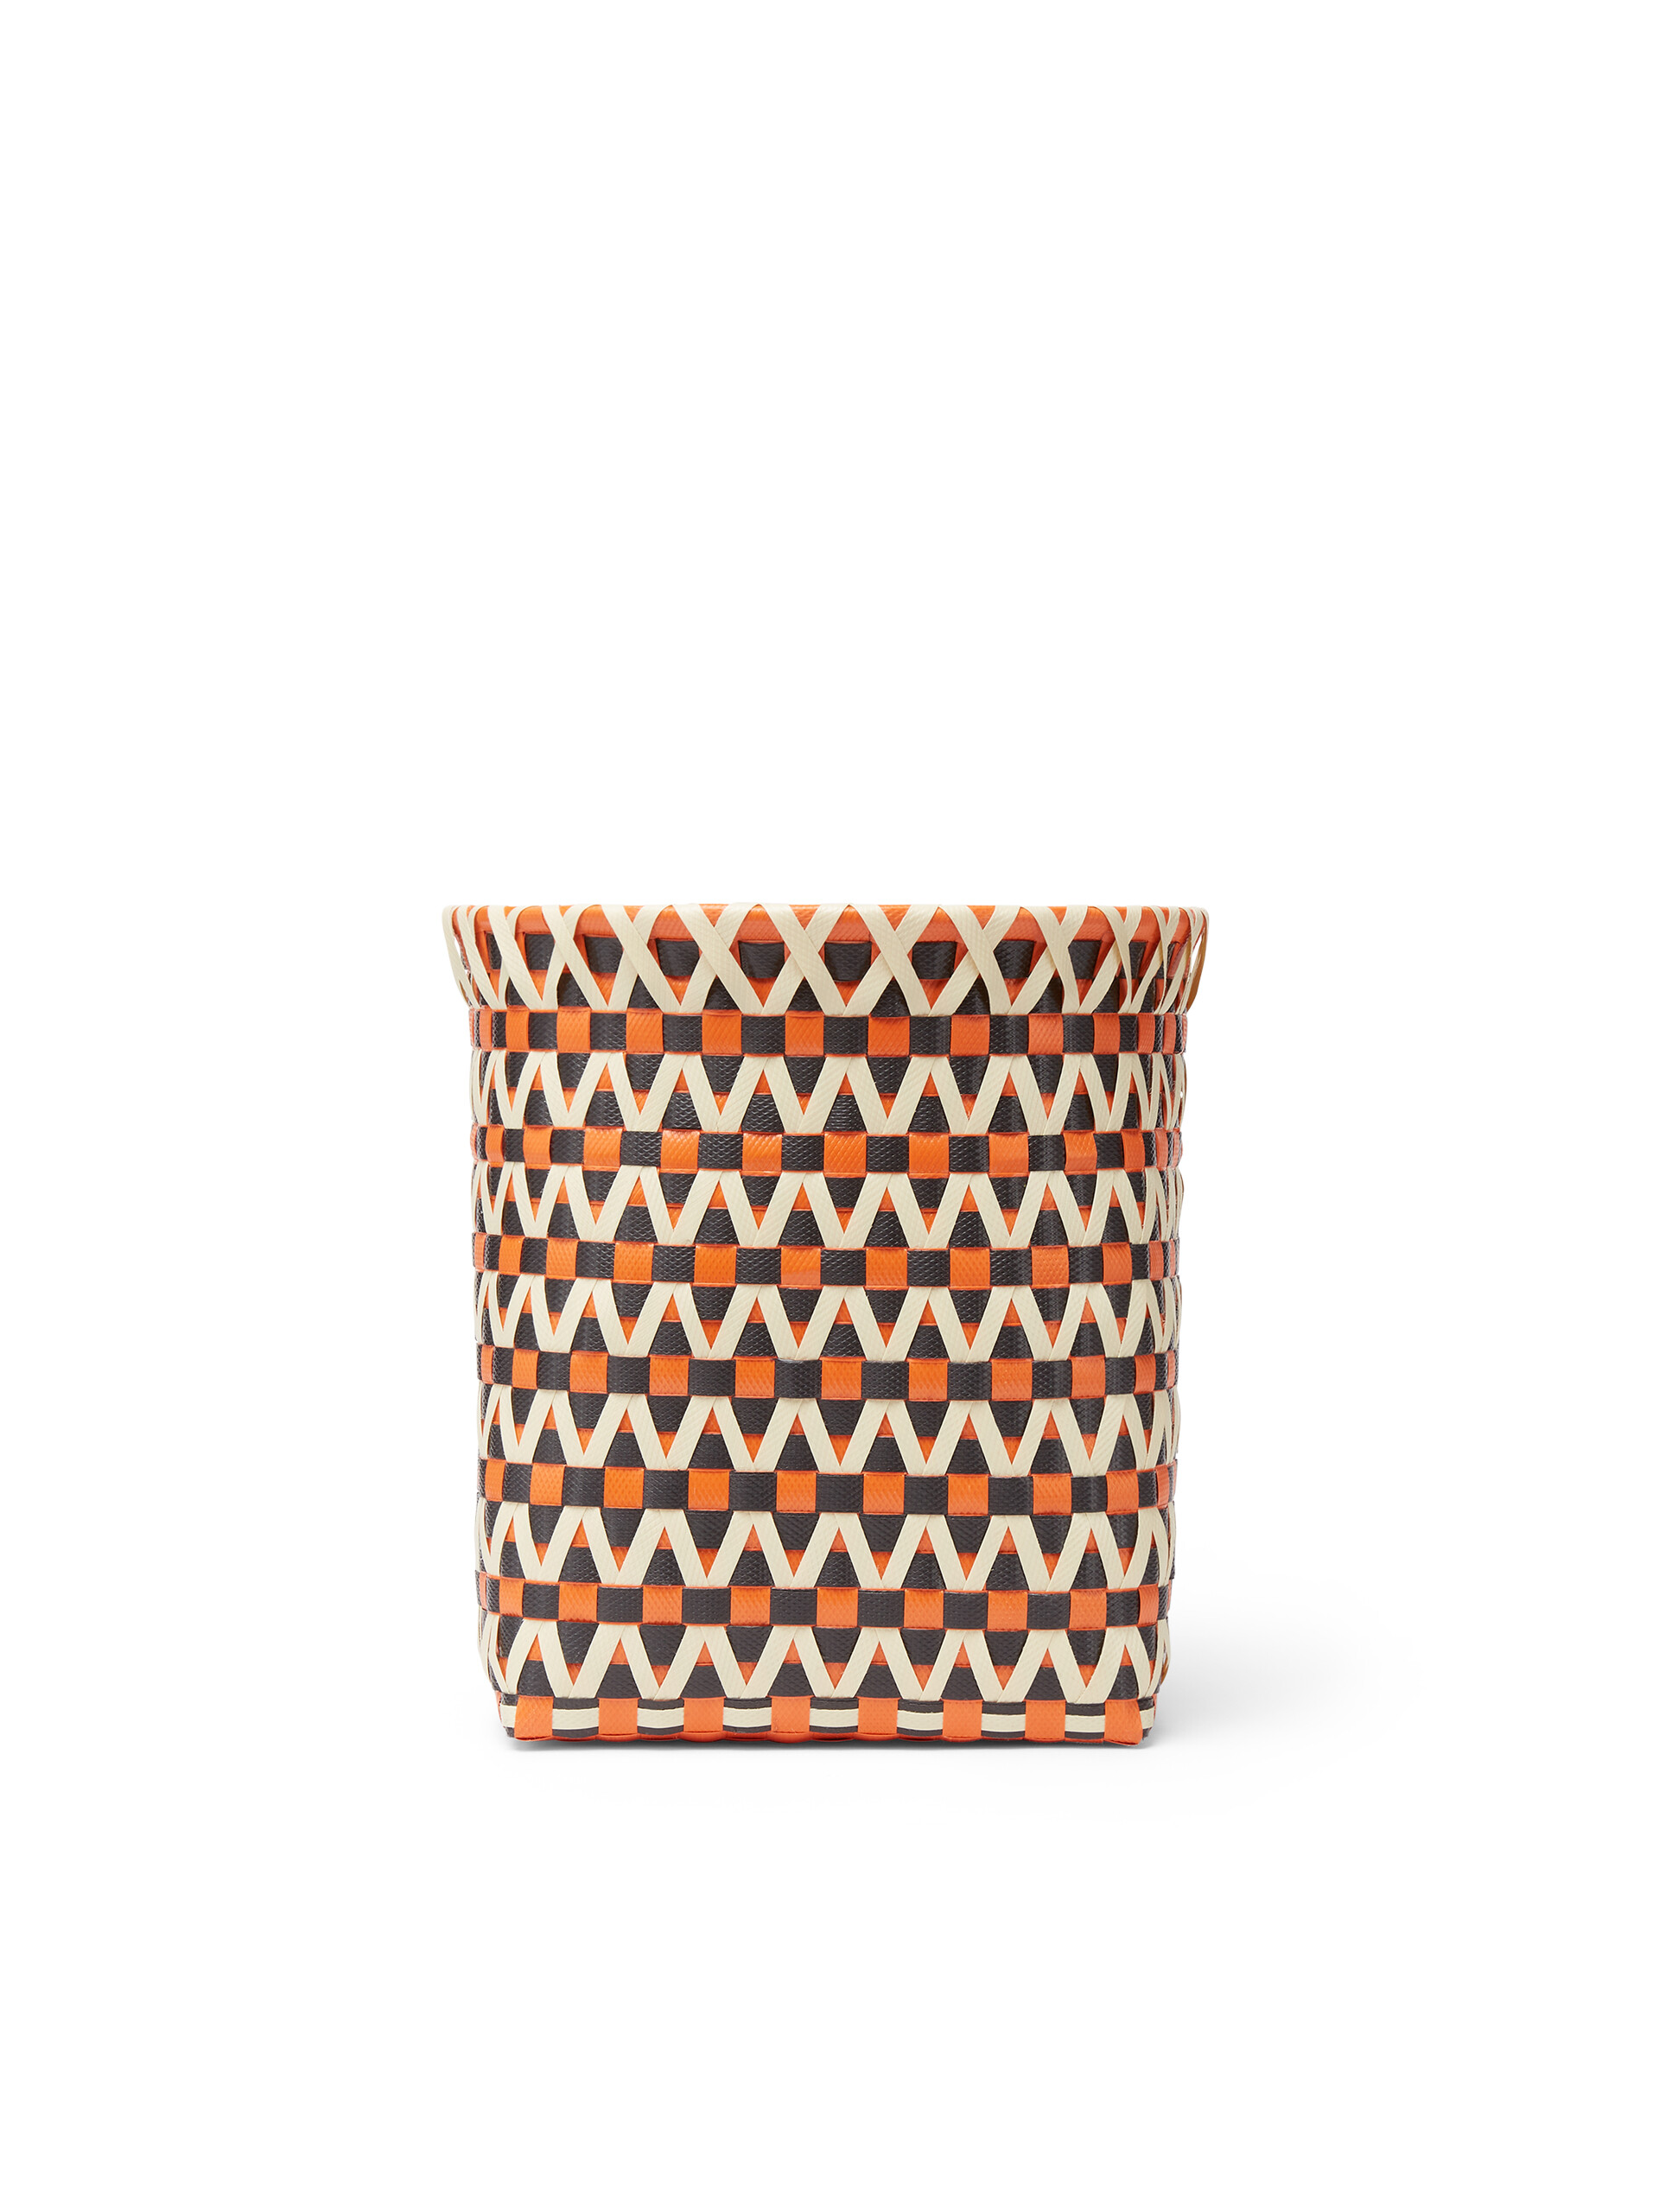 MARNI MARKET basket in orange black and white woven PVC - Accessories - Image 3